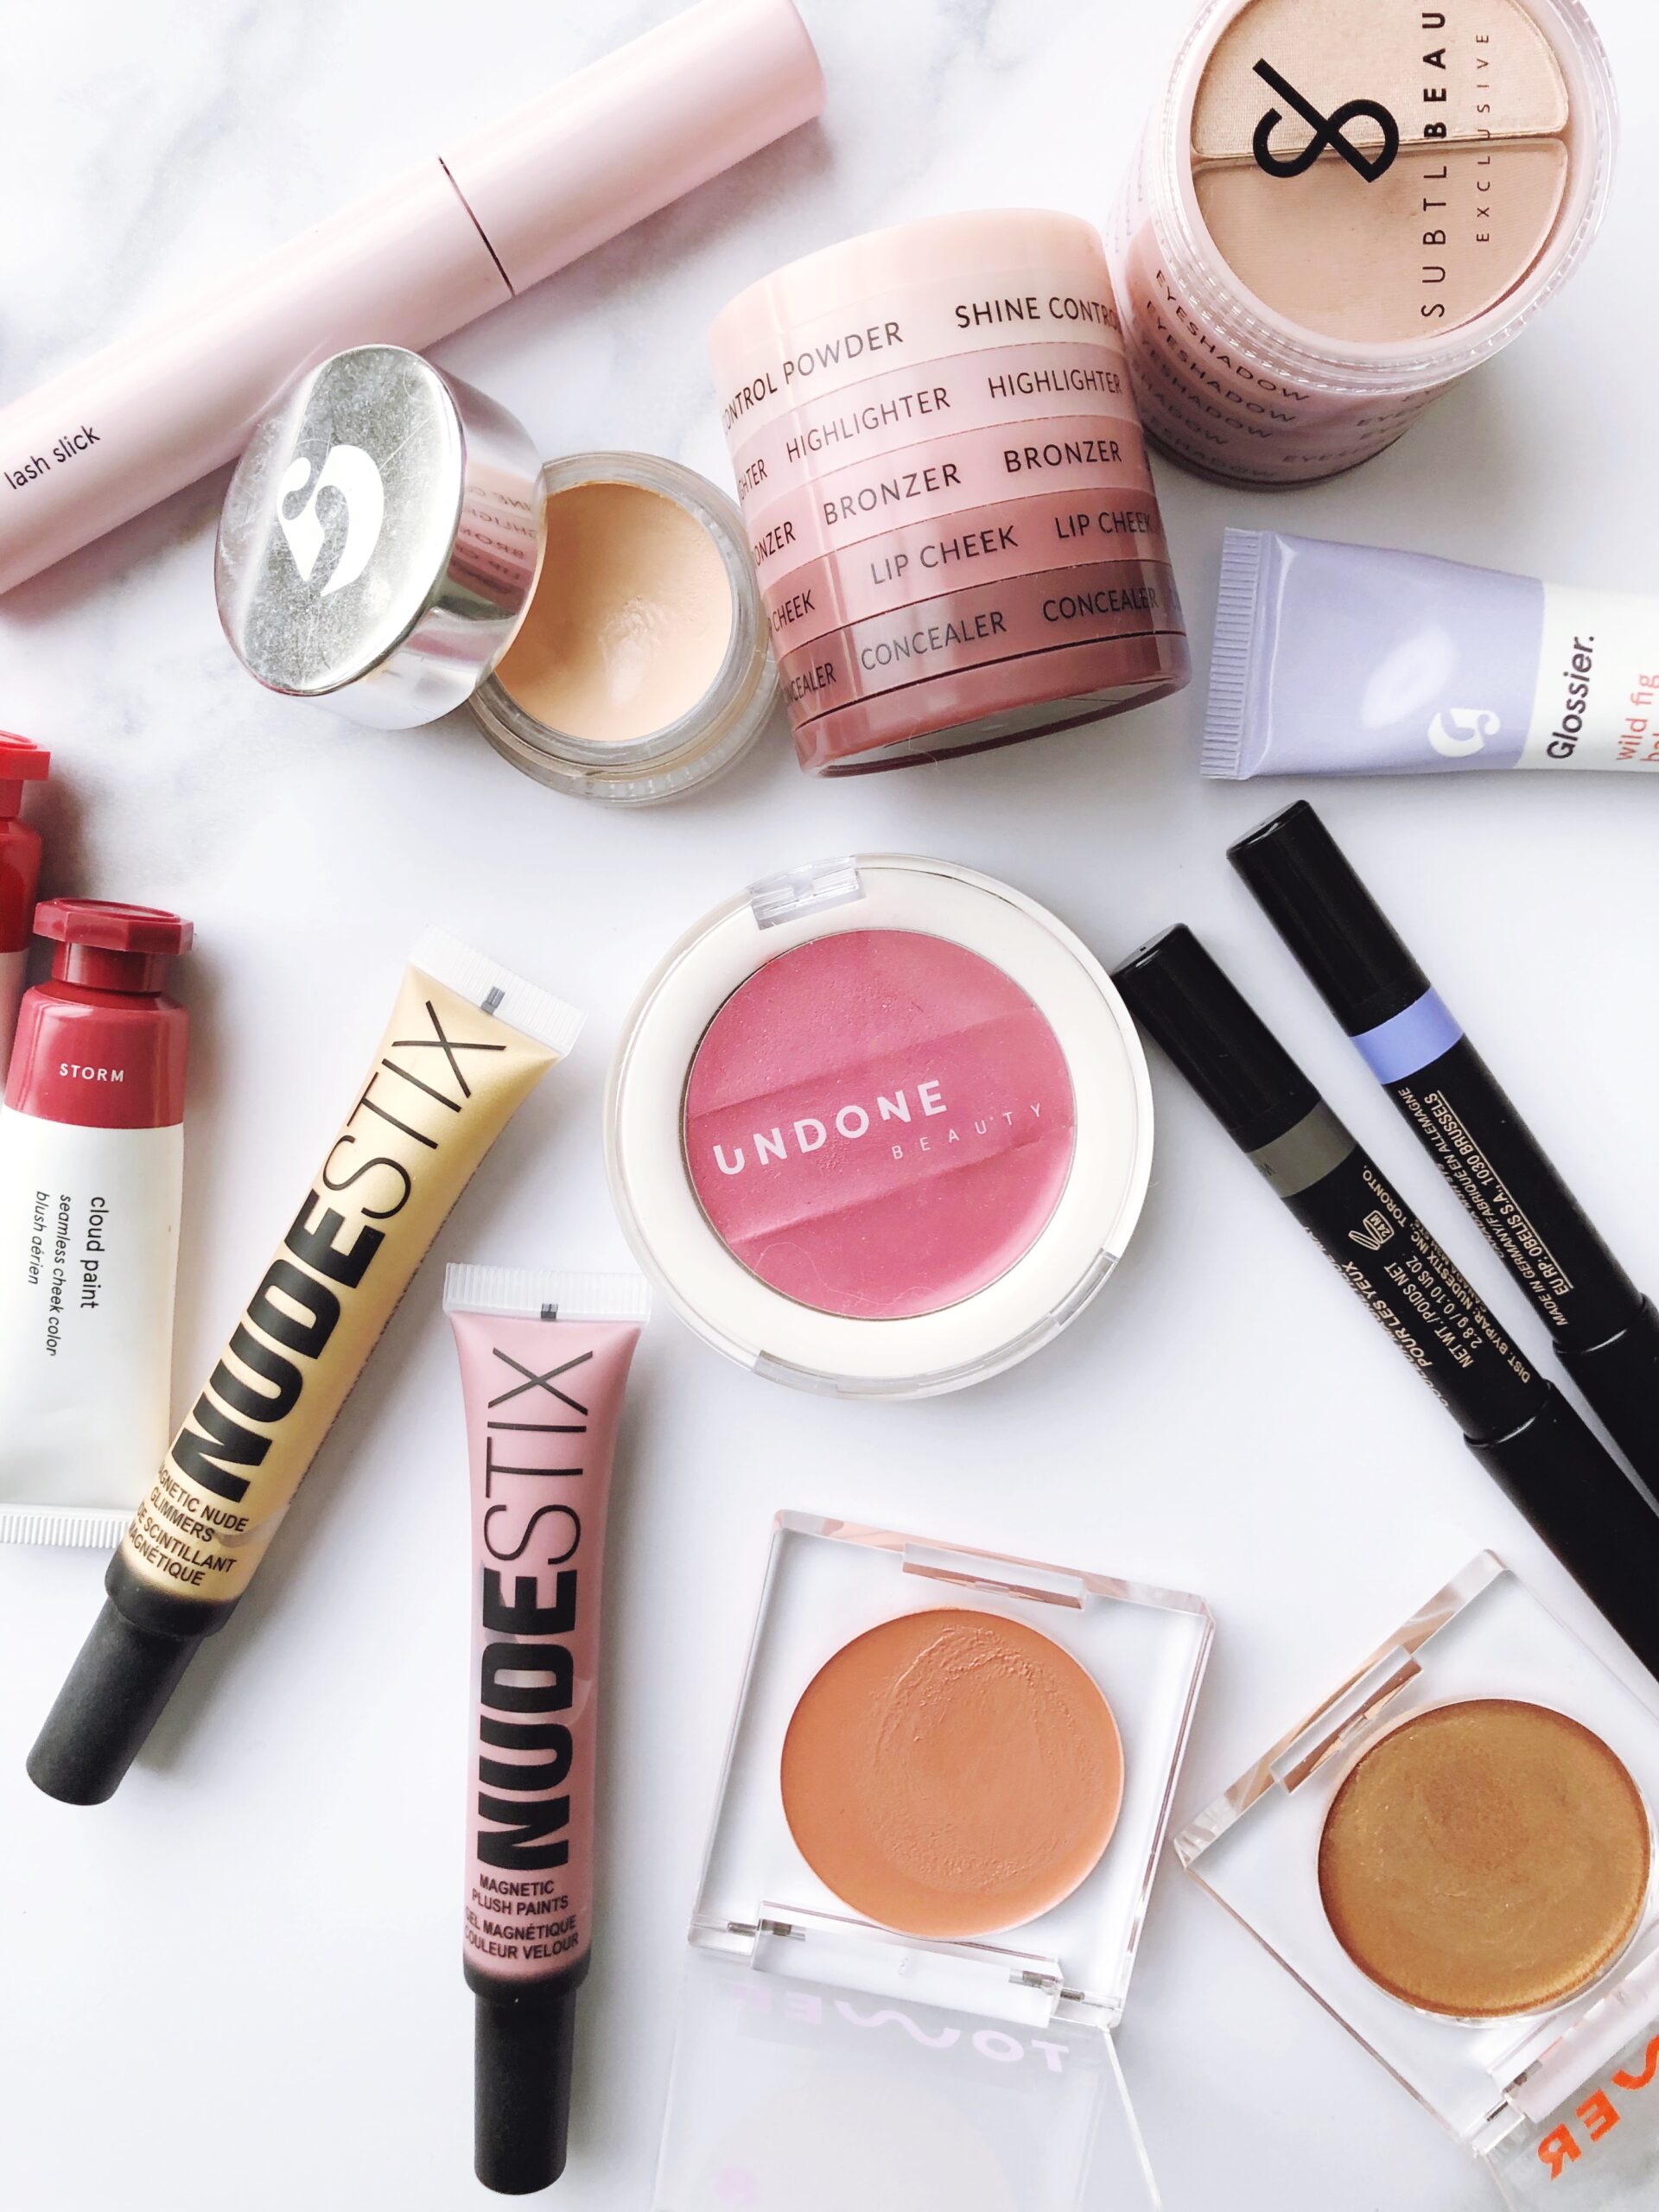 Top 5 Best Minimalist Makeup Brands To Shop Laptrinhx News 